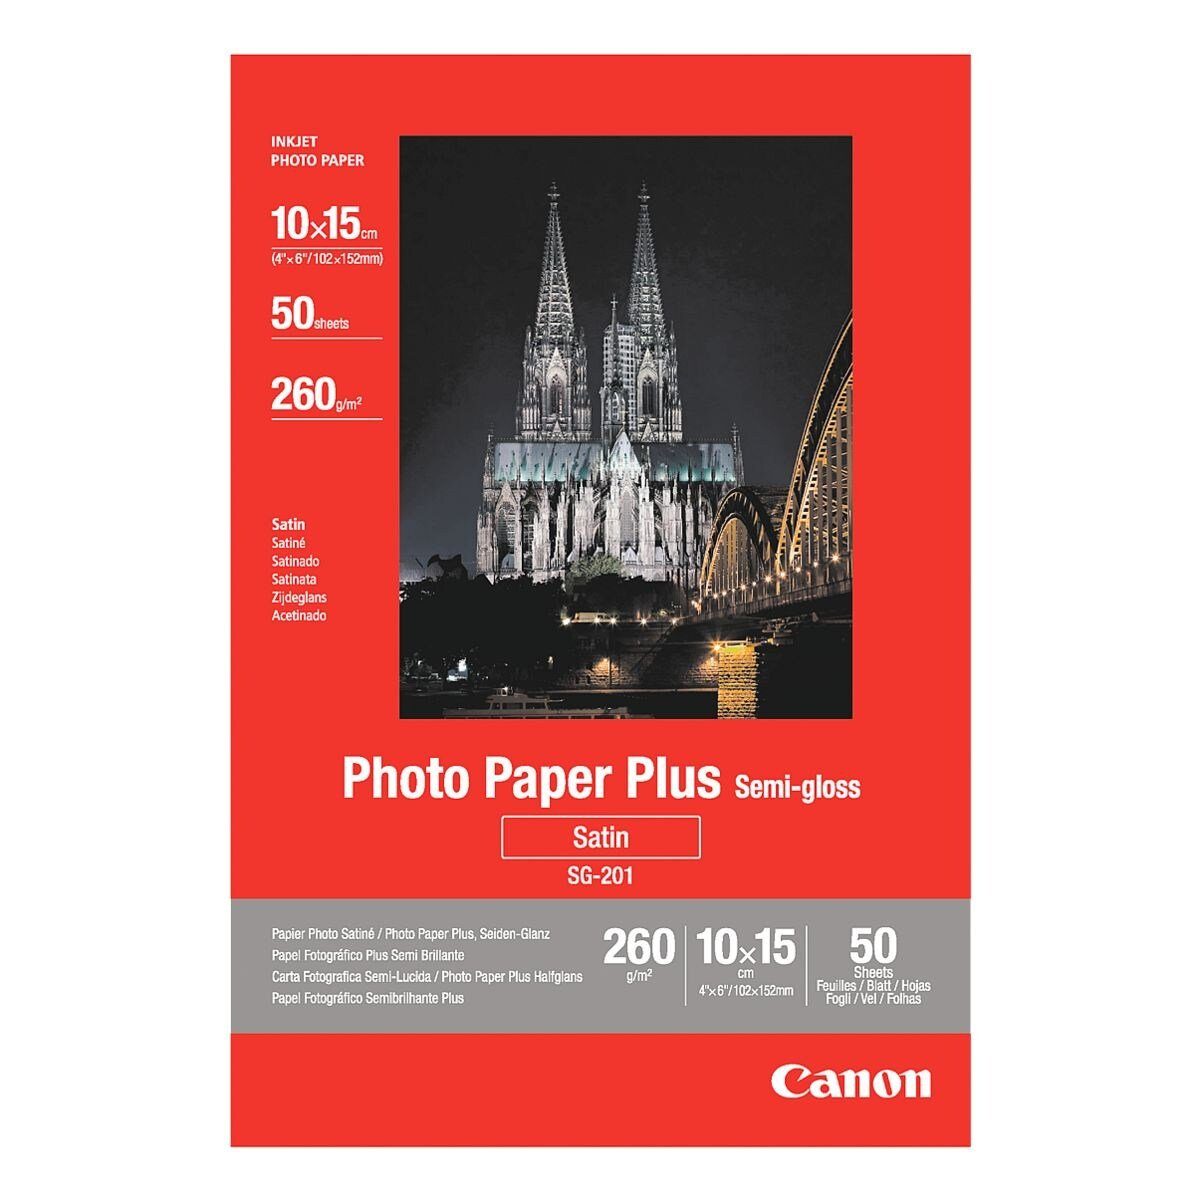 50 seidenmatt, 260 Plus Blatt g/m², 10x15 Format cm, Semi-Gloss, Canon Fotopapier